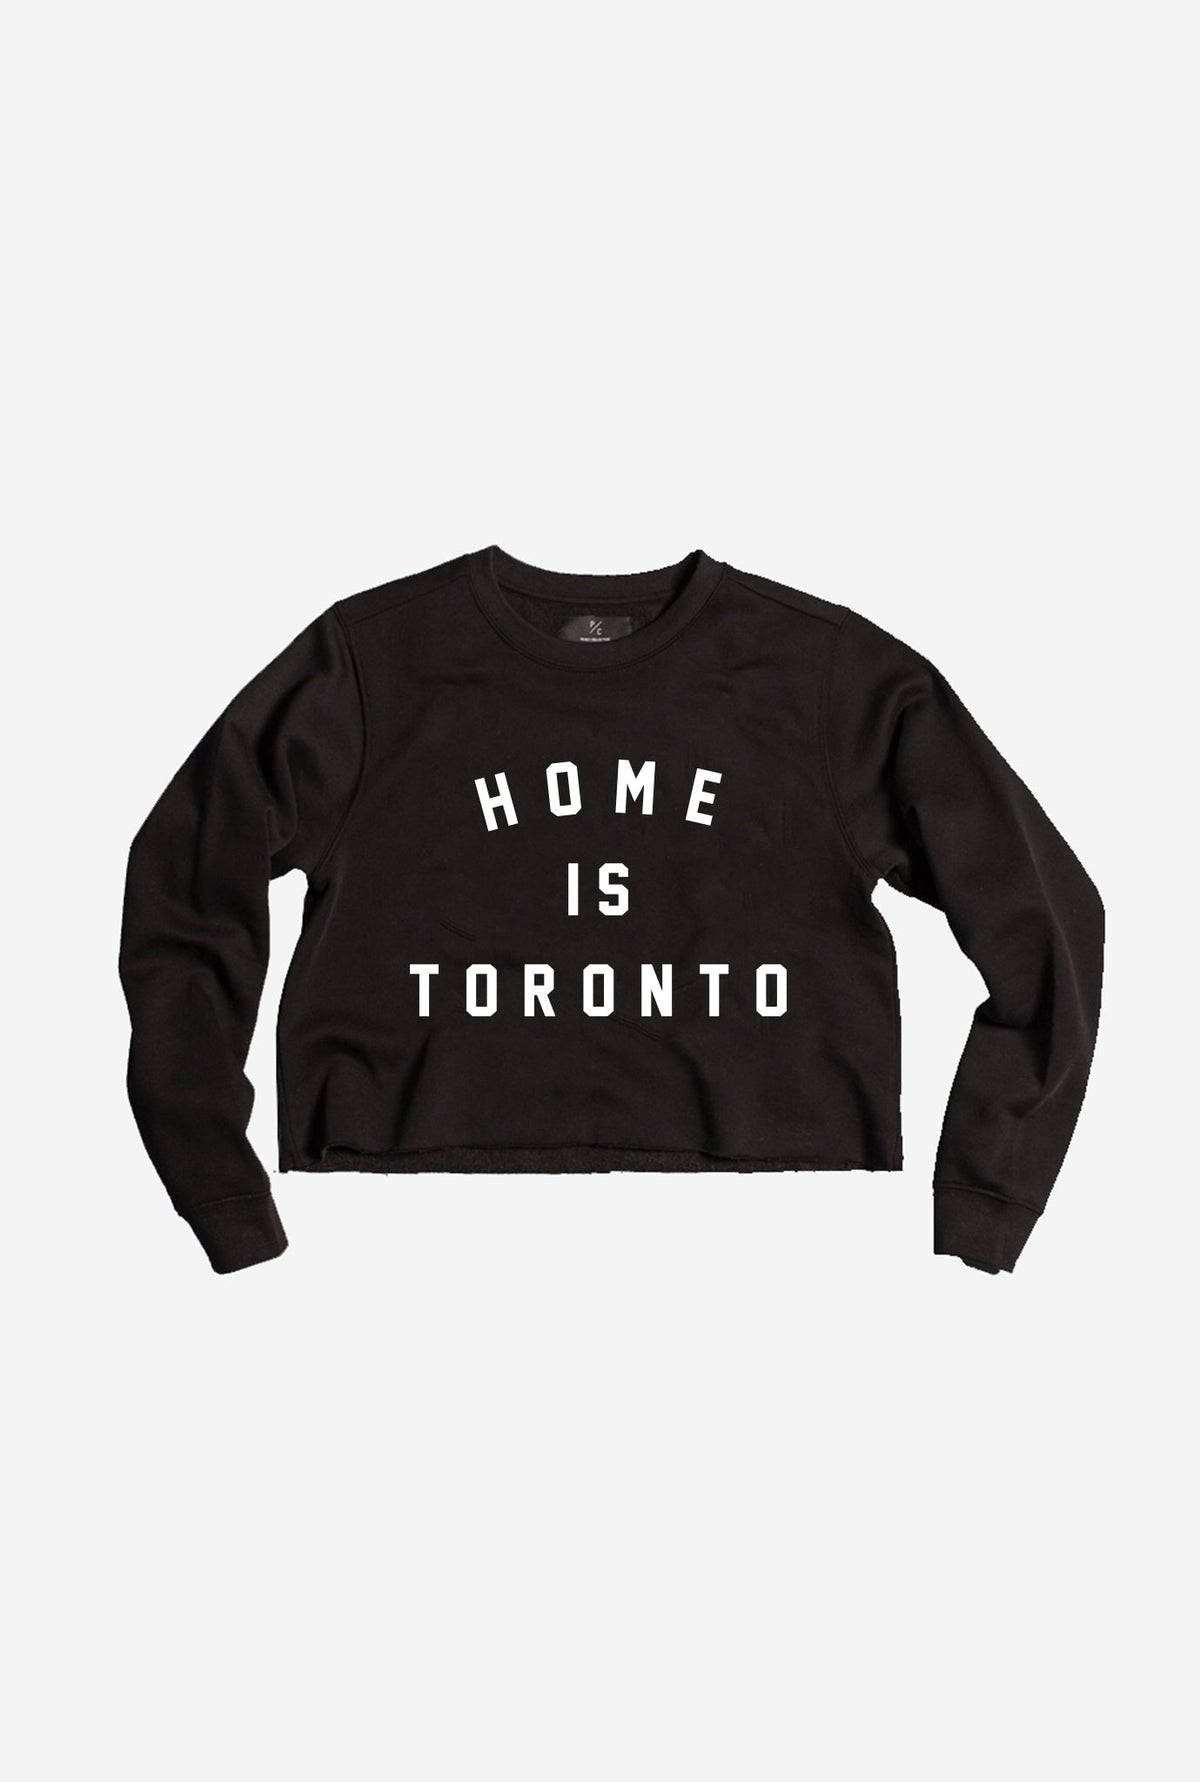 Home is Toronto Varsity Cropped Crewneck - Black